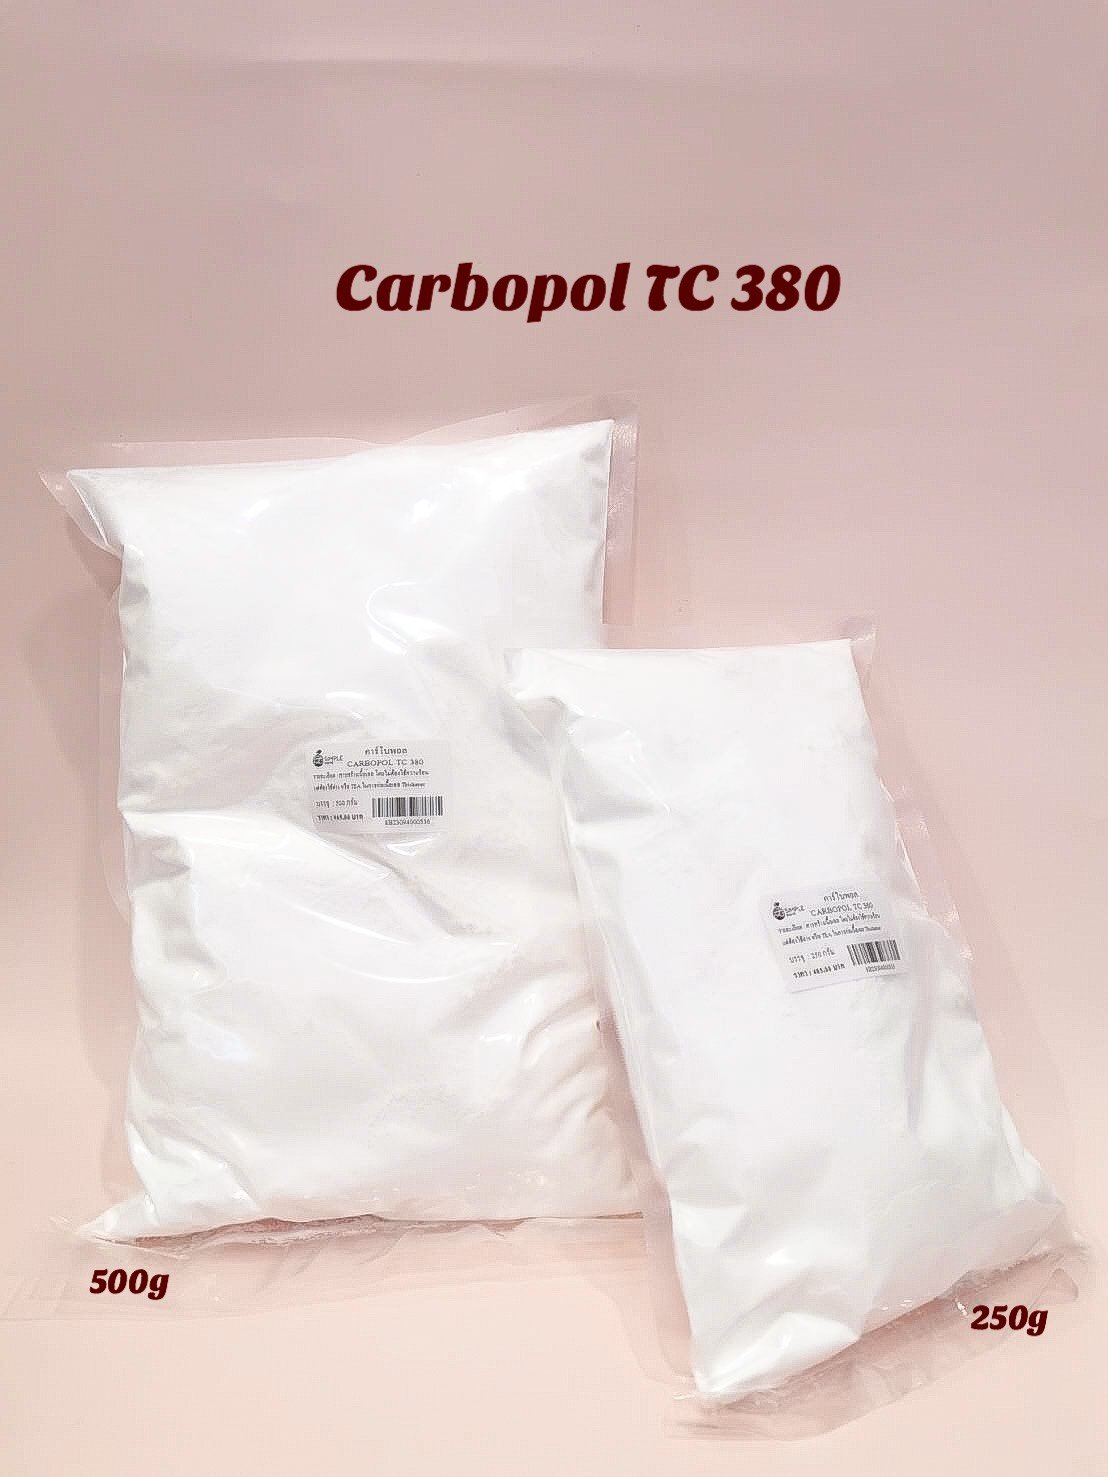 Carbopol TC 380